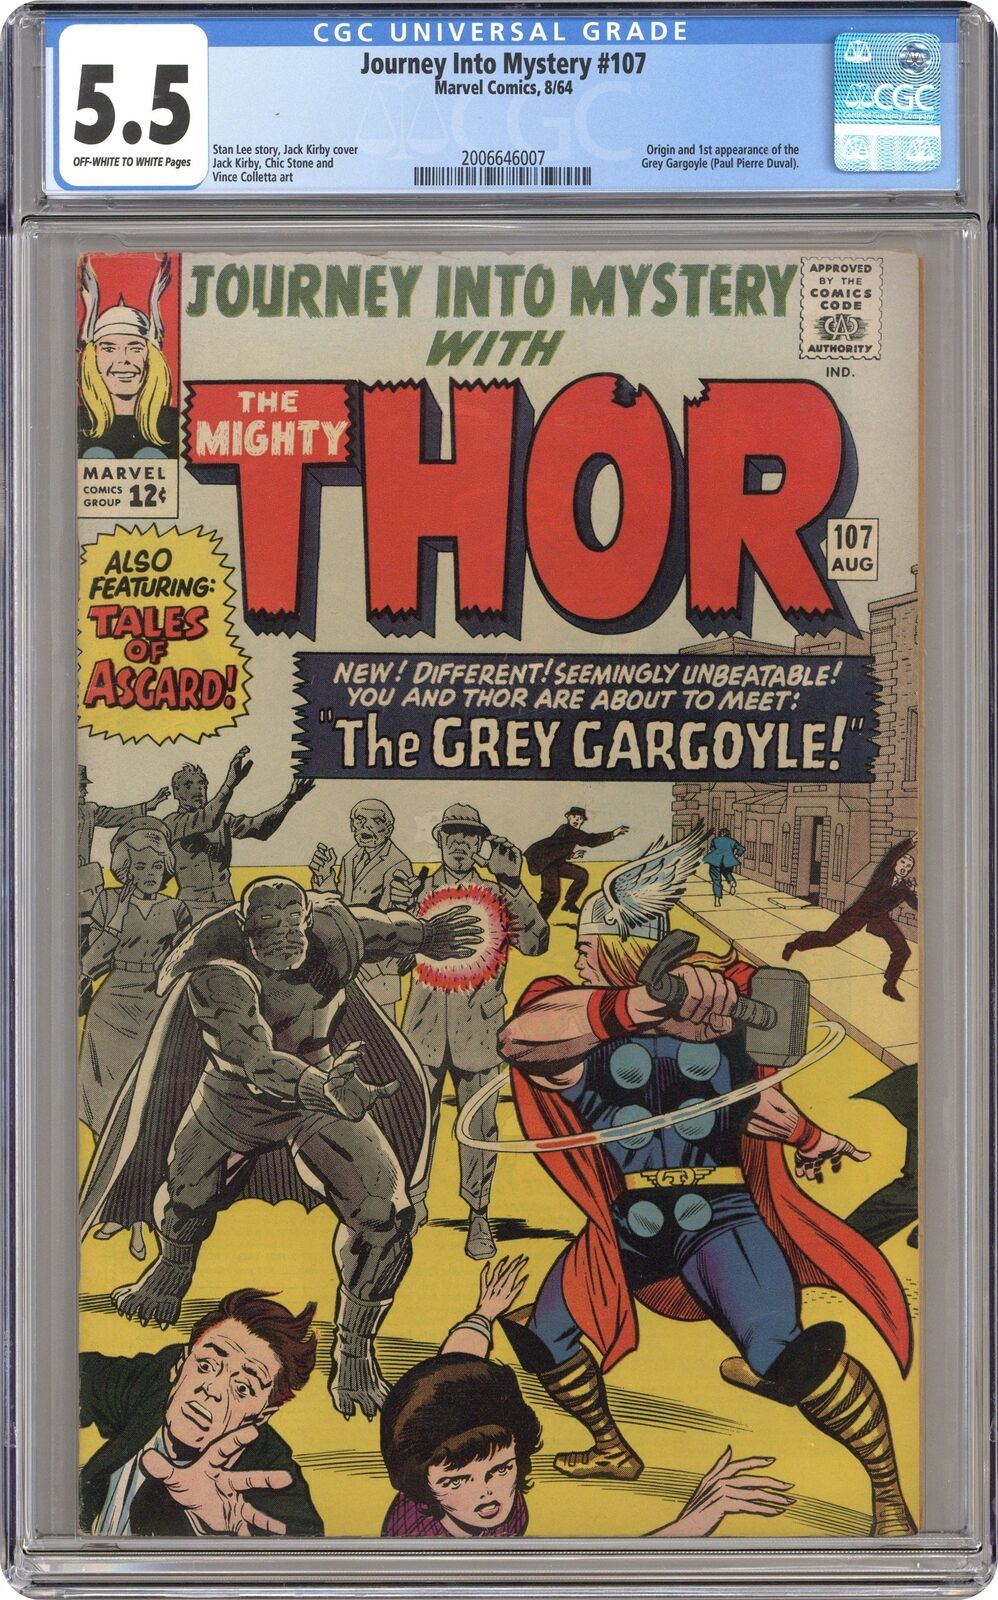 Thor Journey Into Mystery #107 CGC 5.5 1964 2006646007